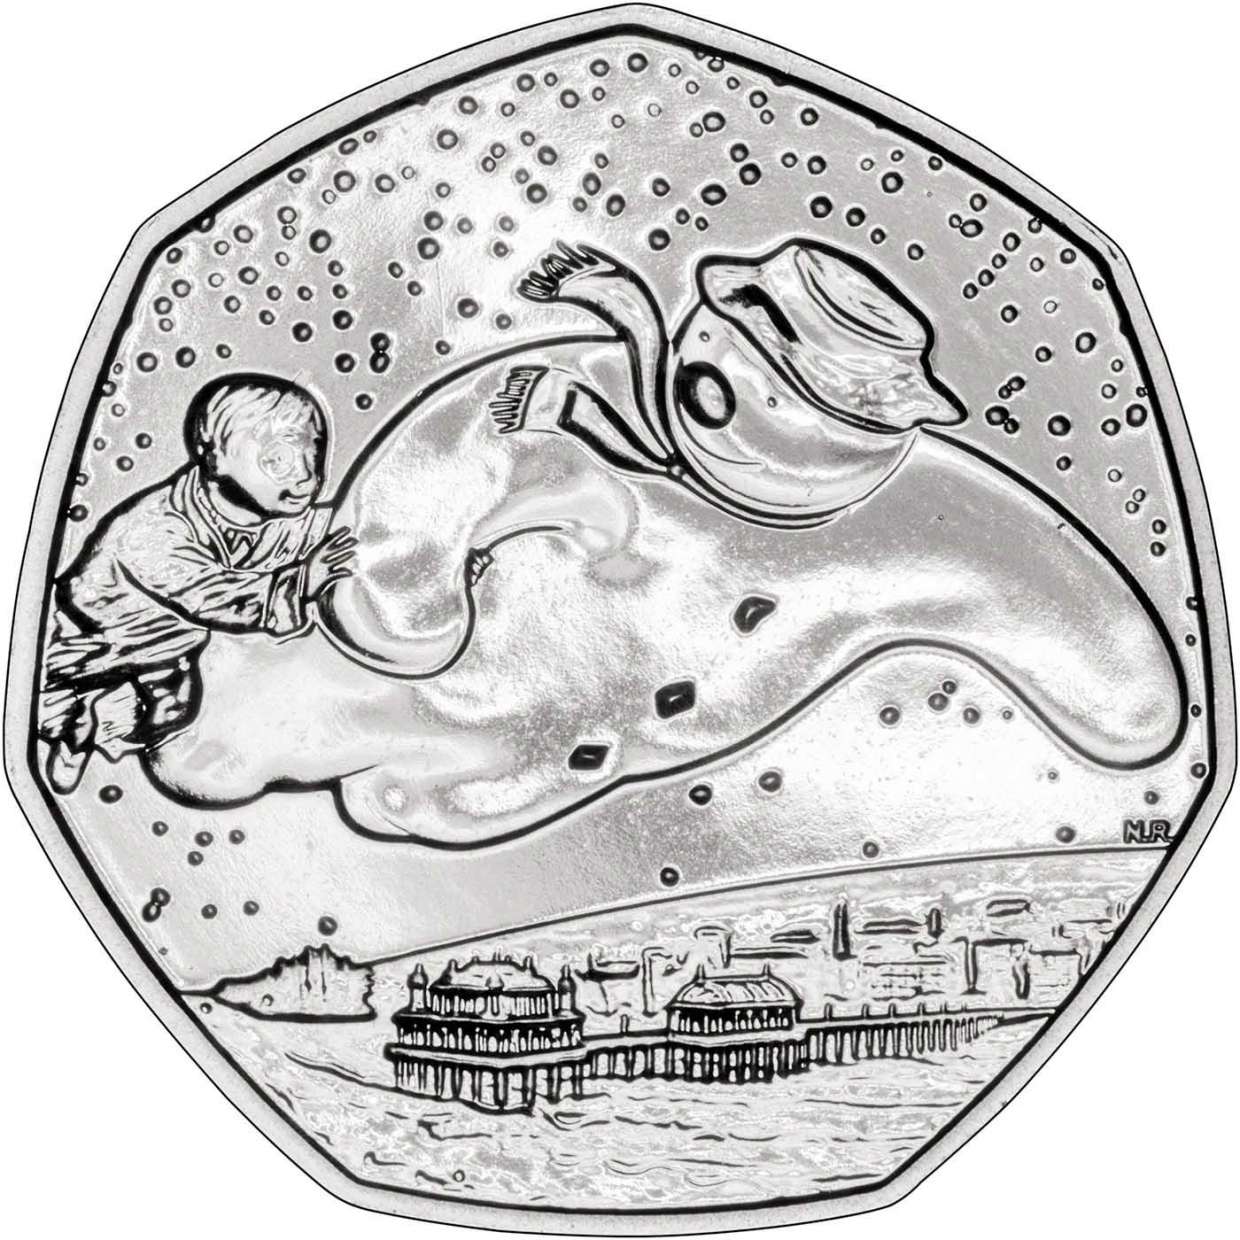 2018 UK Coin 50p BU The Snowman